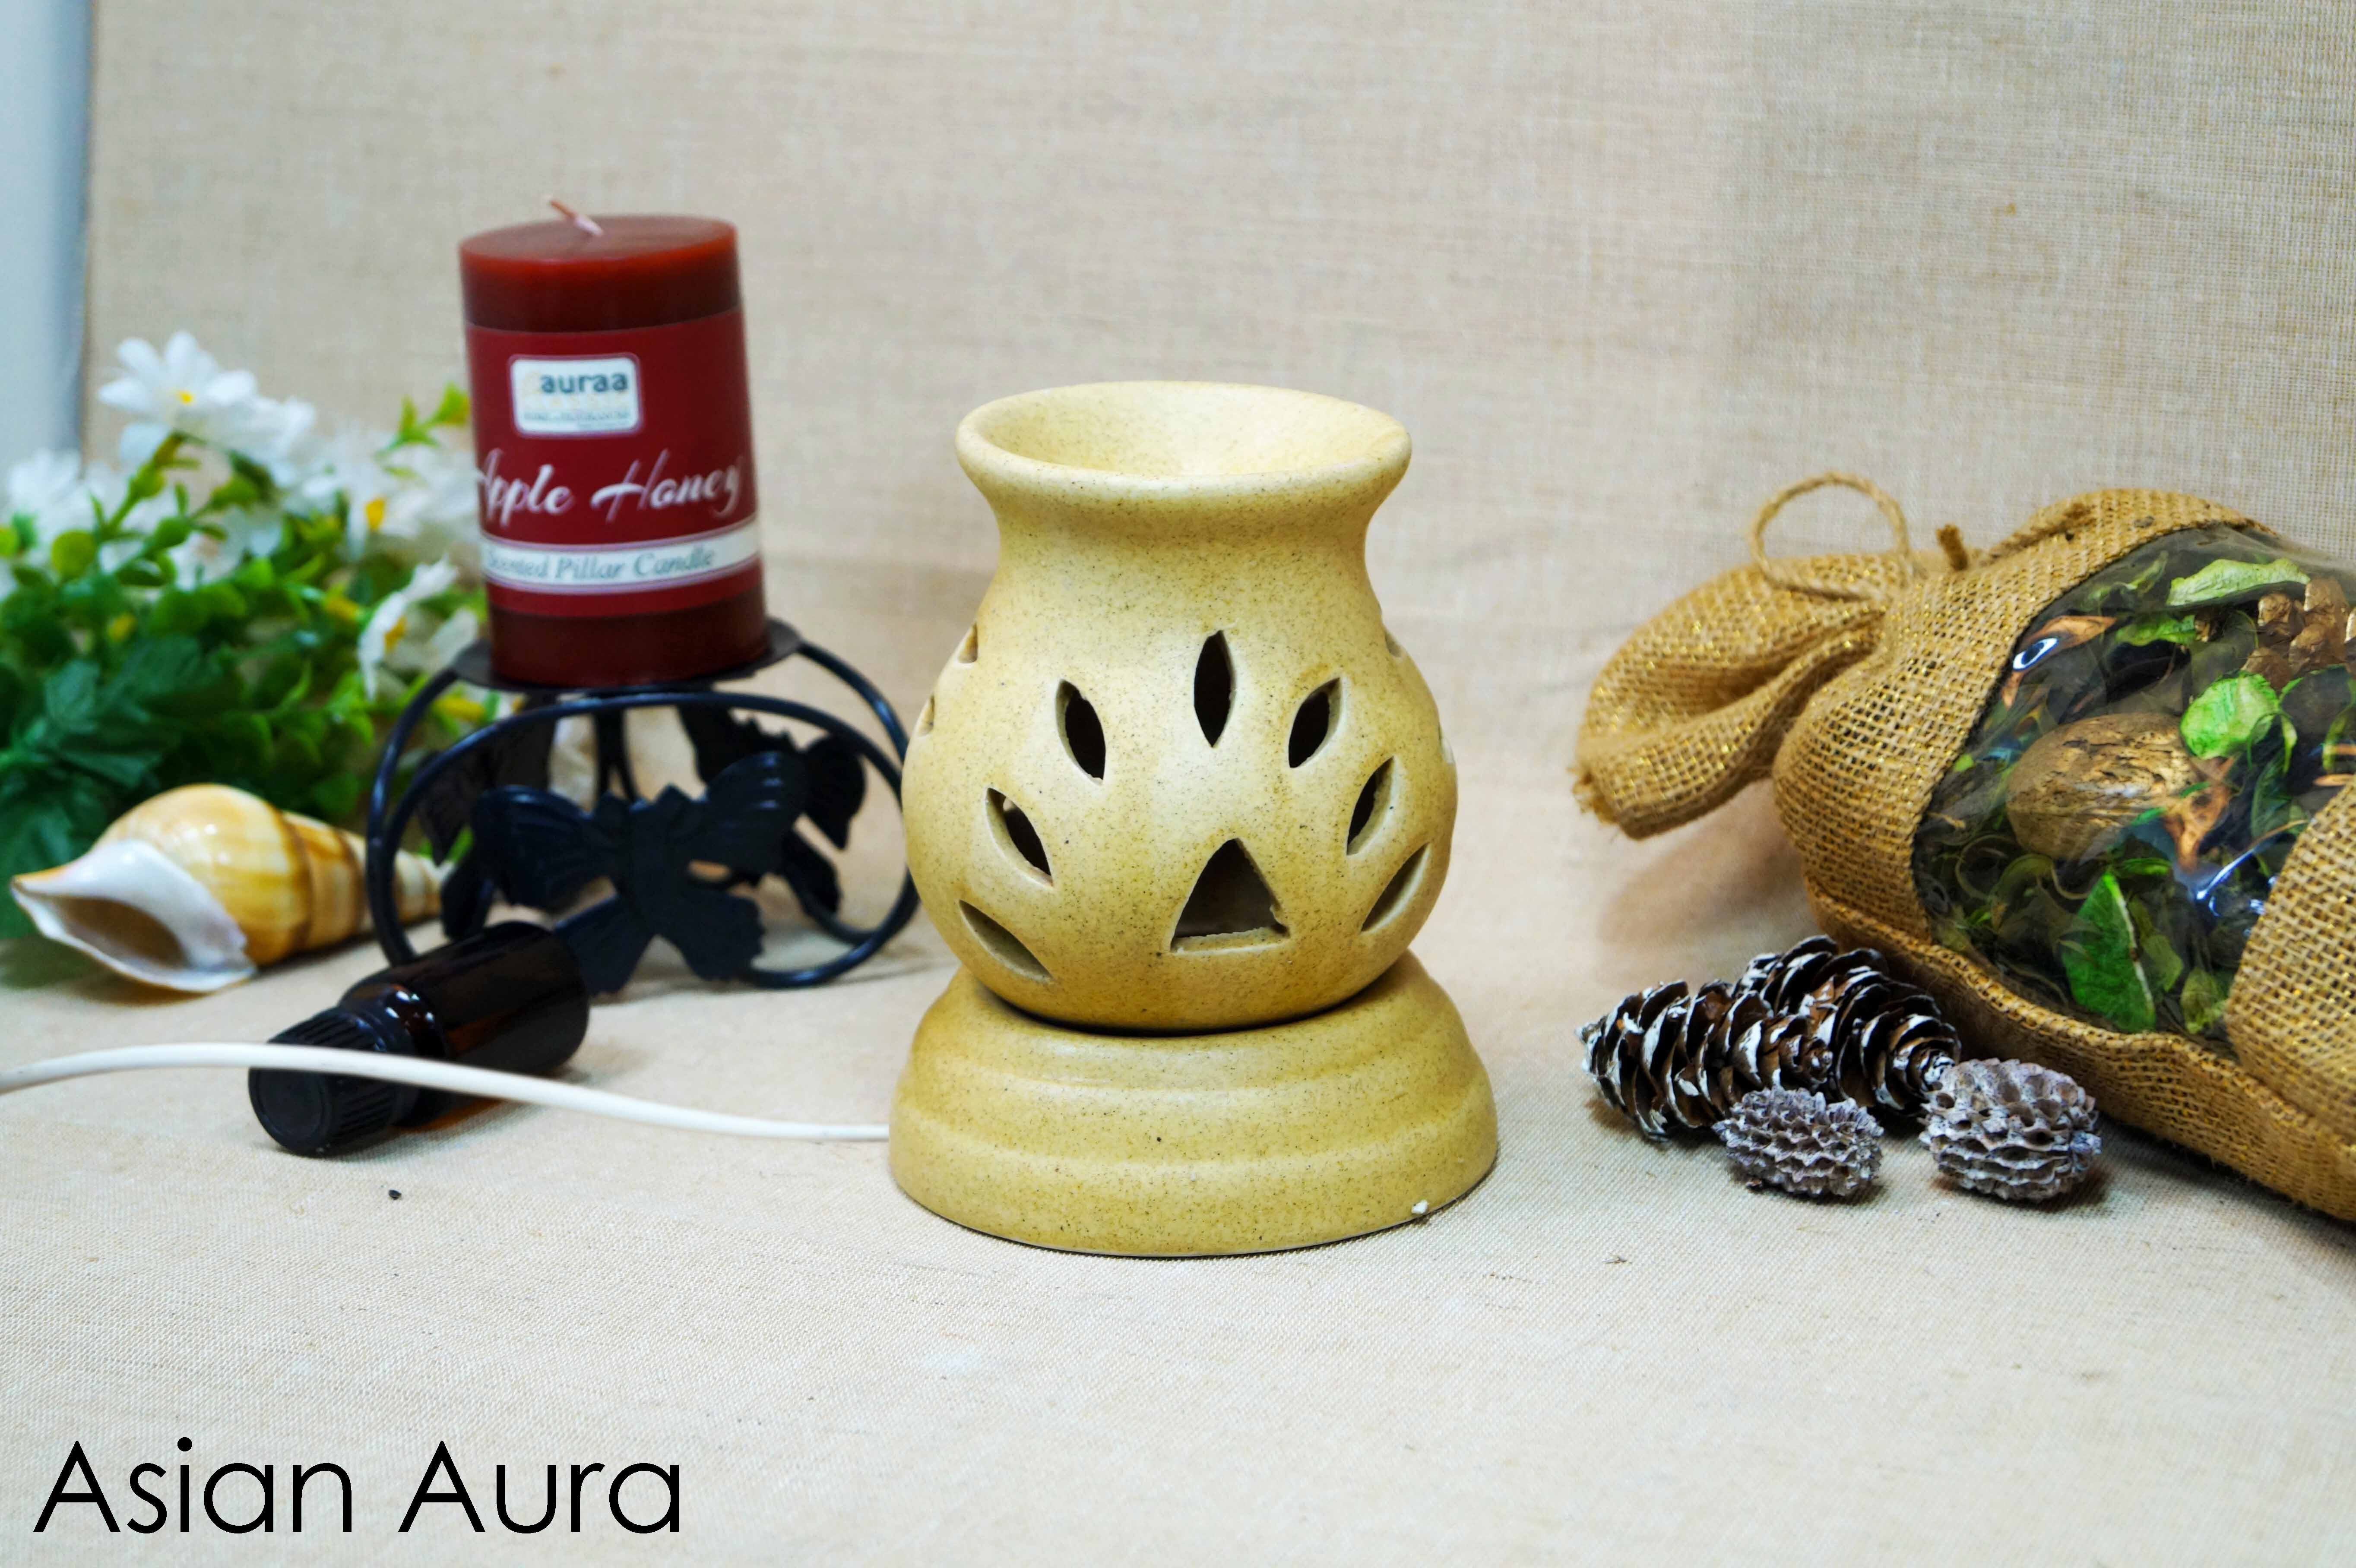 Asian Aura Ceramic Aromatic Oil Diffuser with 2 oil bottles AAEB 004-B